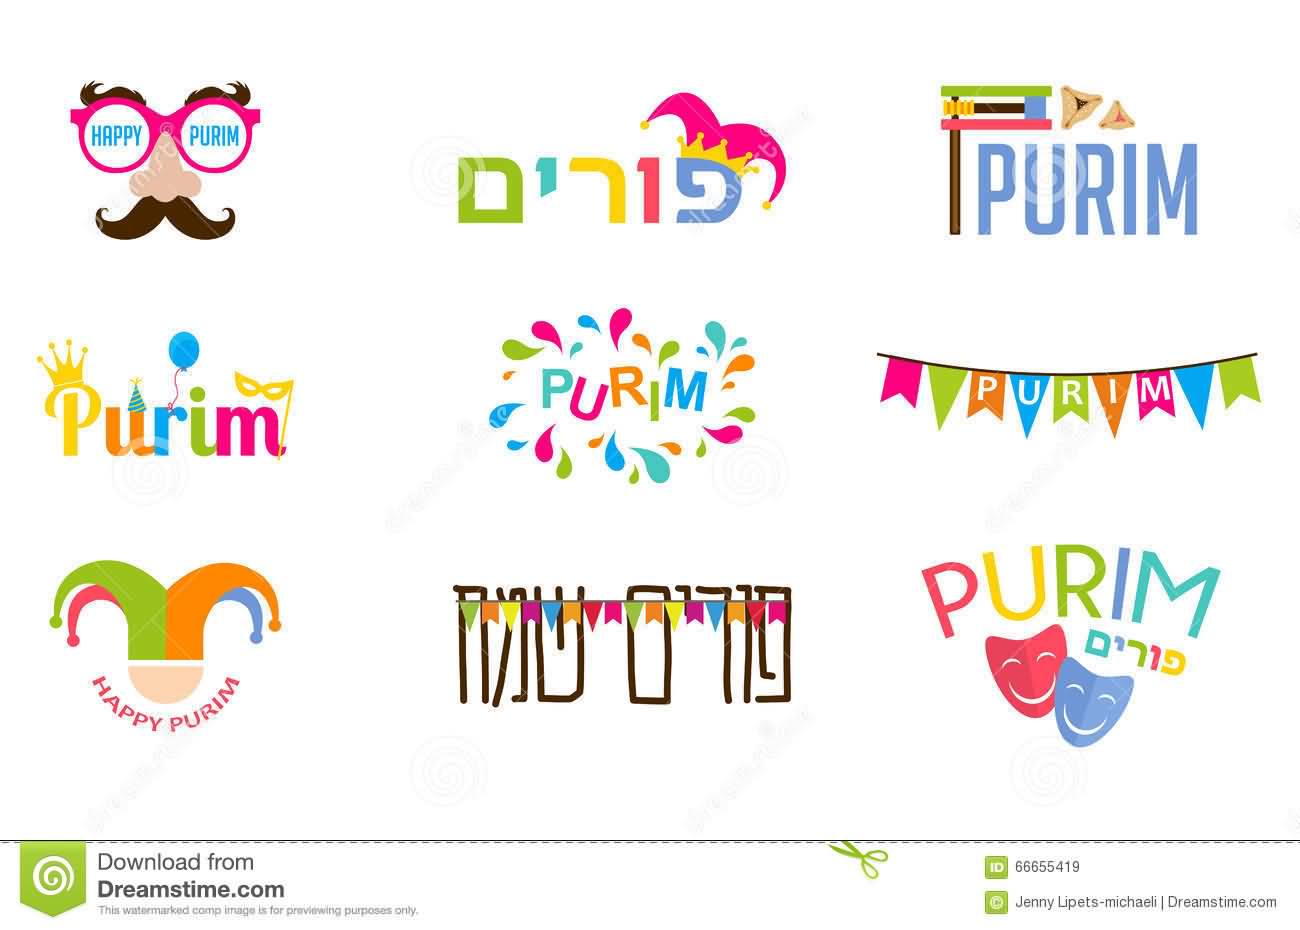 Happy Purim Wishes Illustration